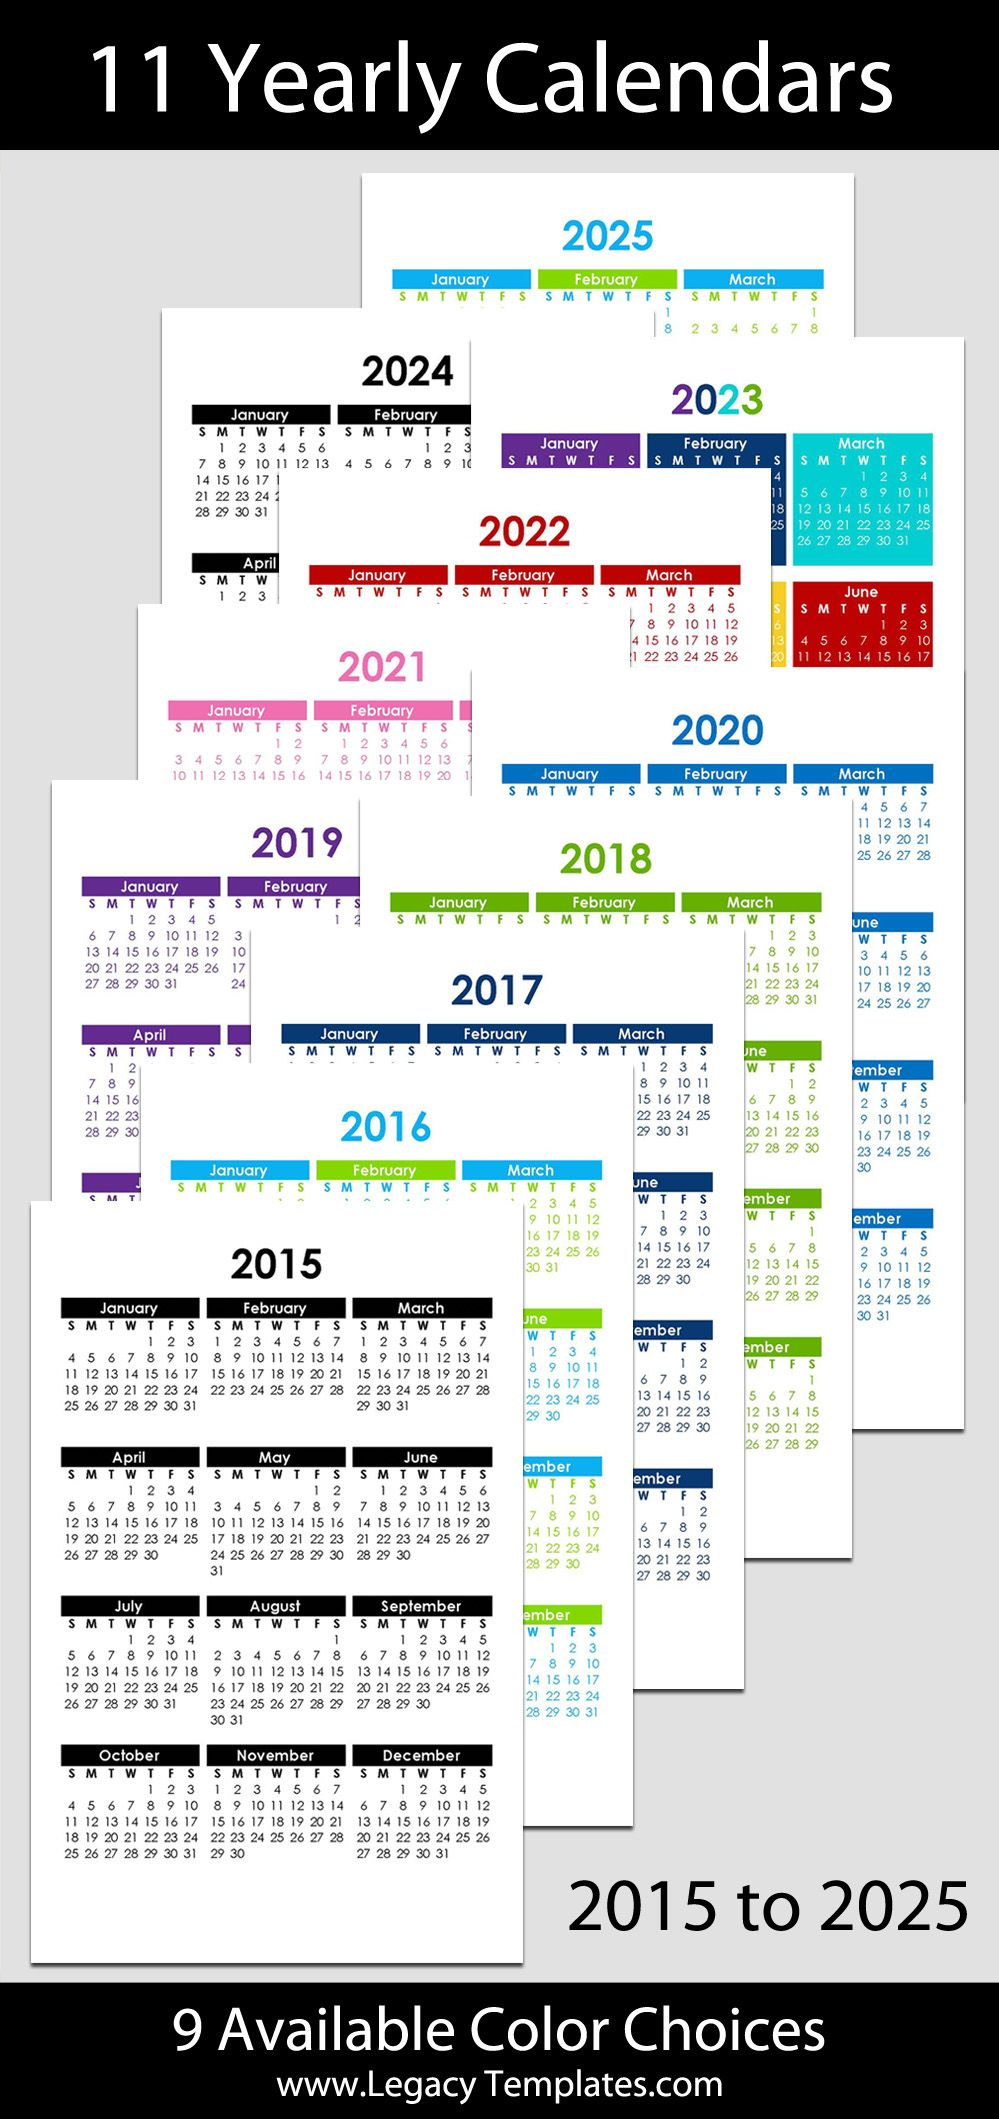 2015 & 2025 Yearly Calendar 5 1/2" X 8 1/2" | Legacy